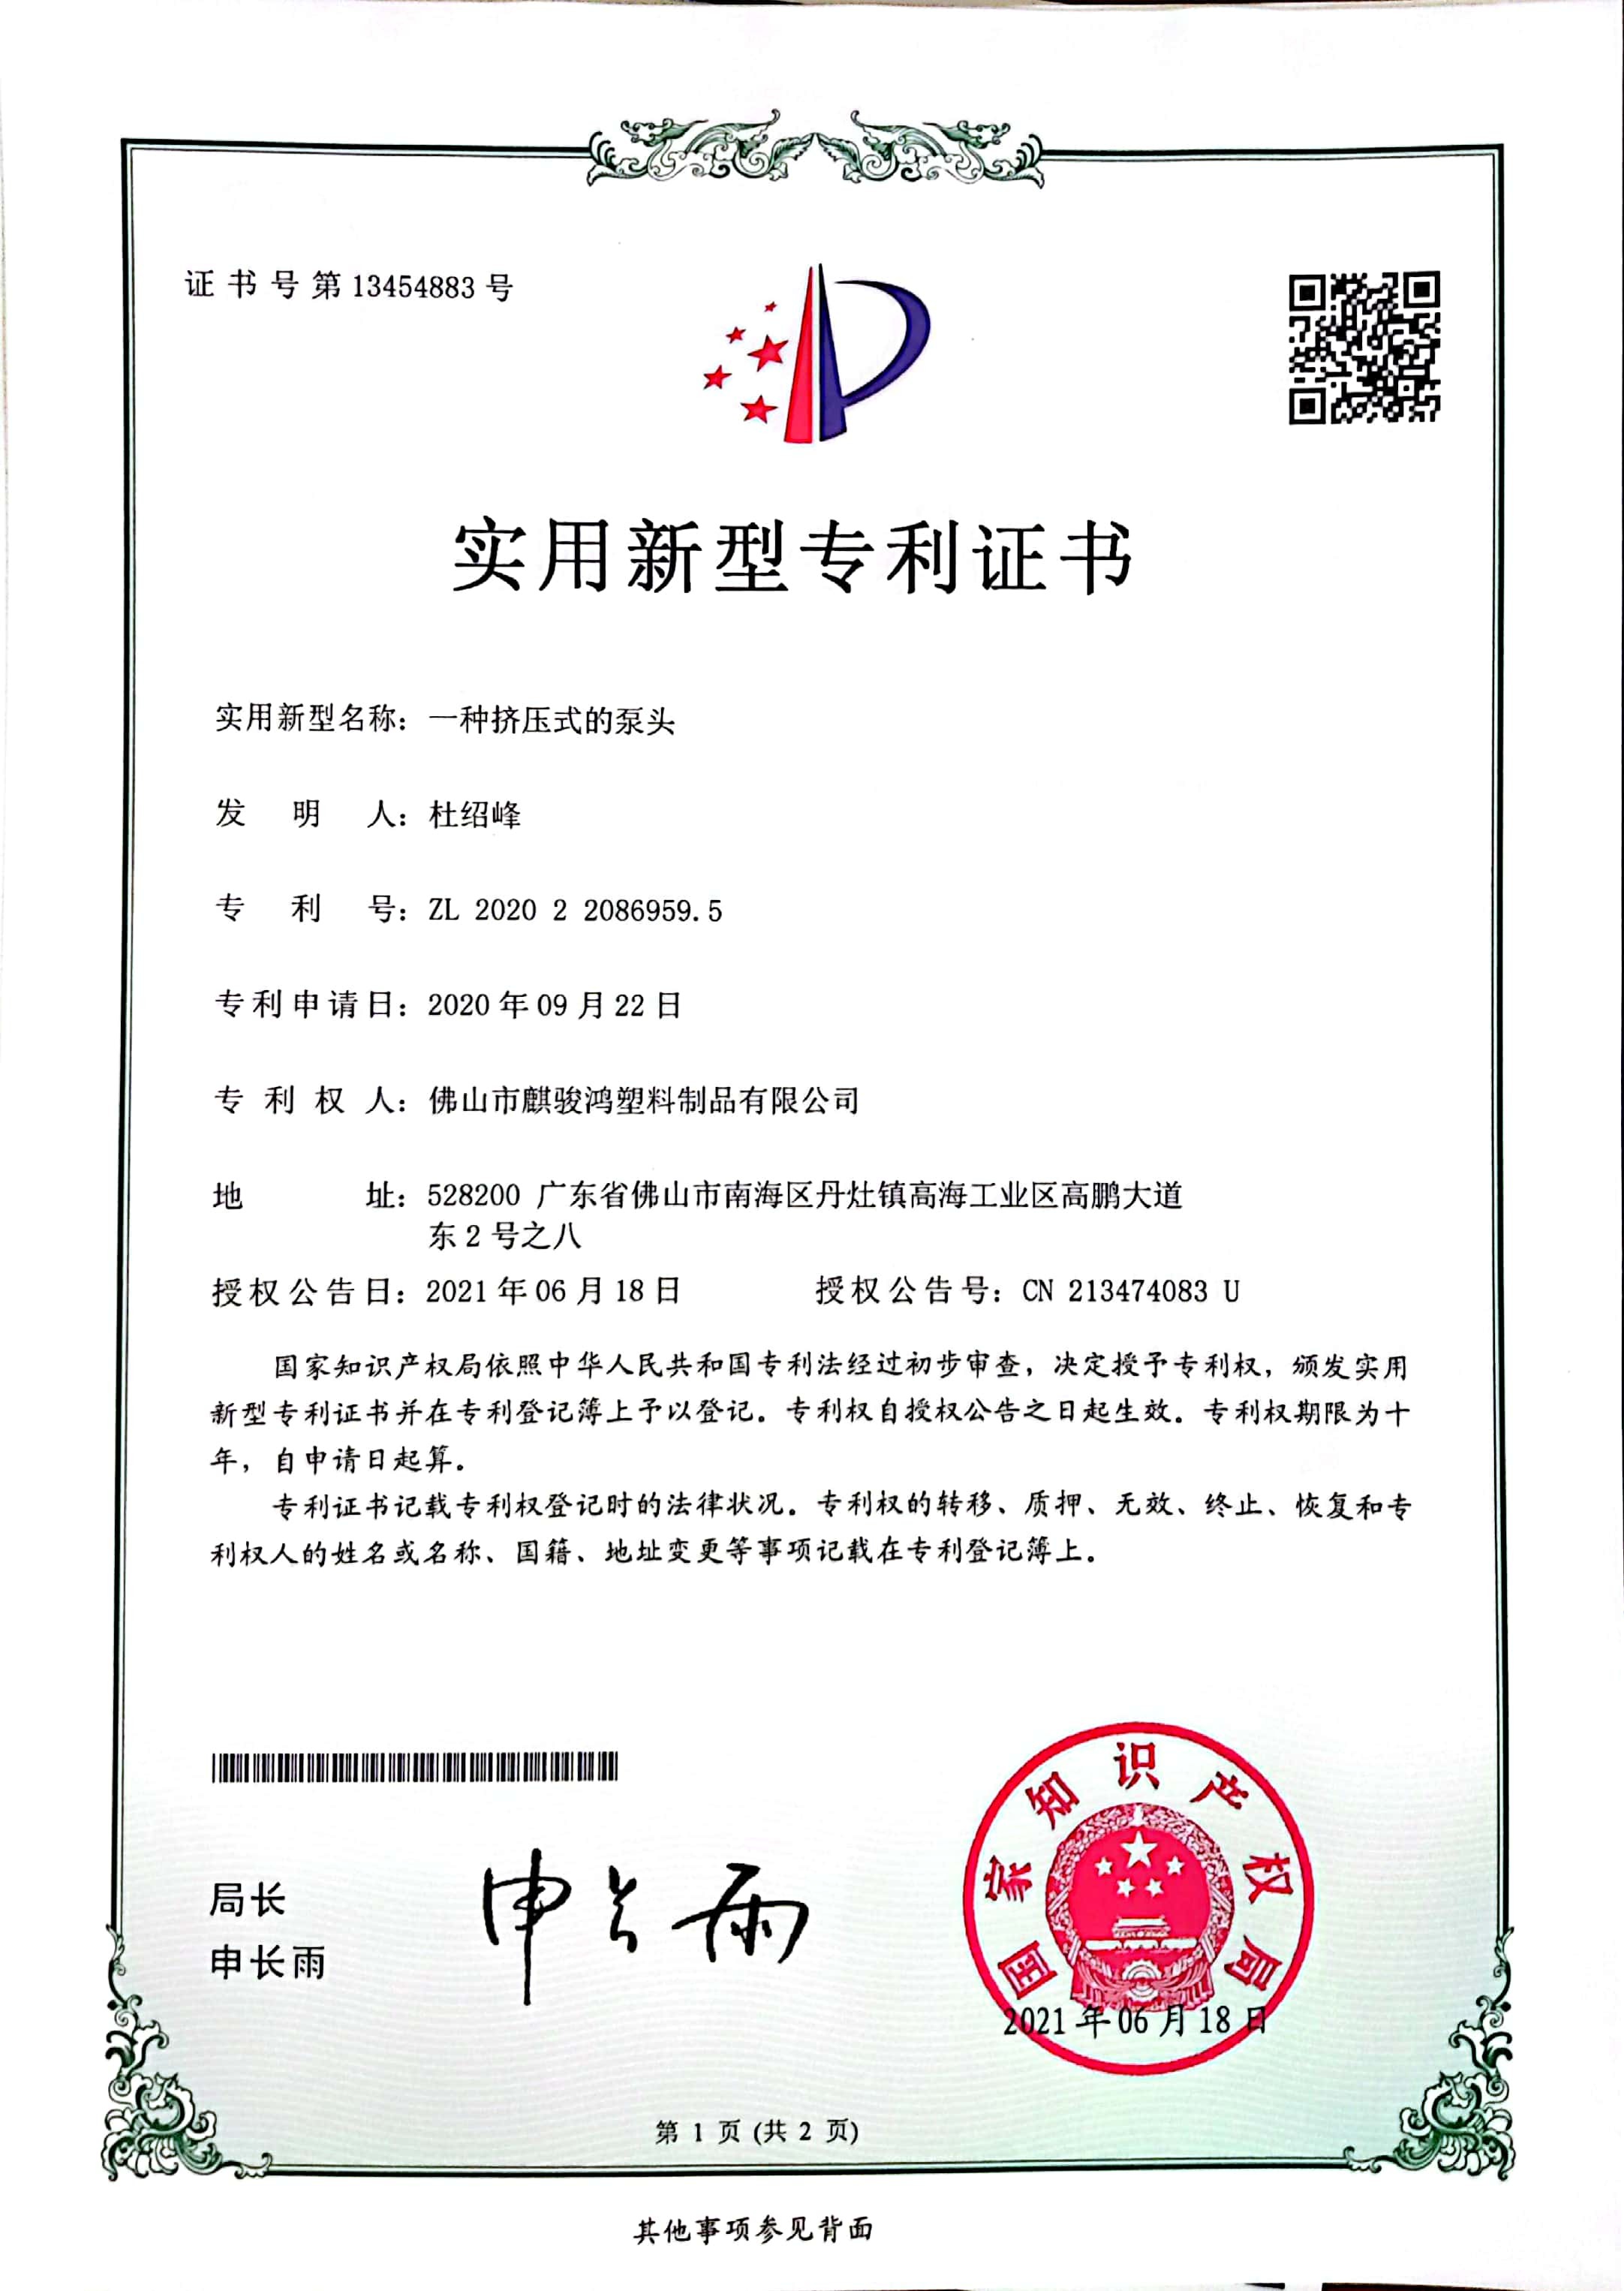 FOSHAN QIJUNHONG PLASTIC PRODUCTS MANUFACTORY CO.,LTD Certifications